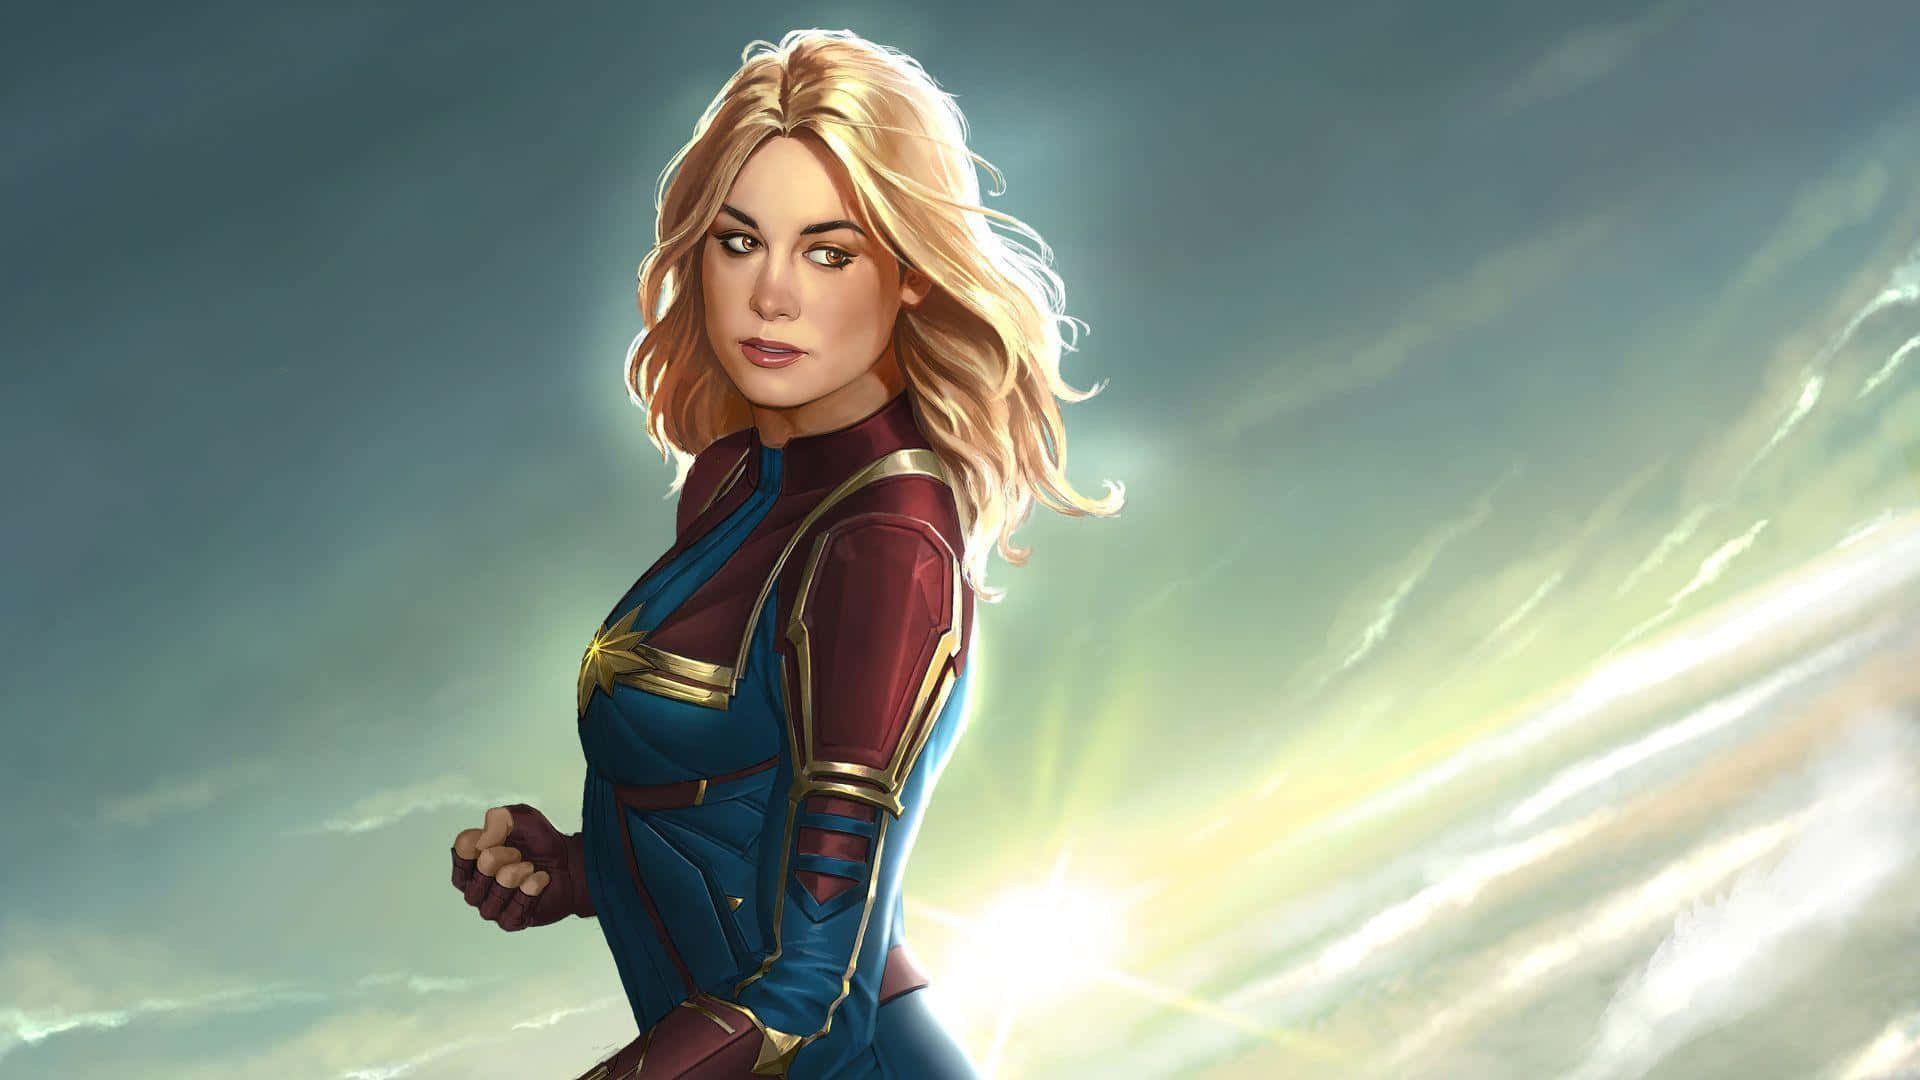 Brie Larson As Captain Marvel Soaring Through The Skies